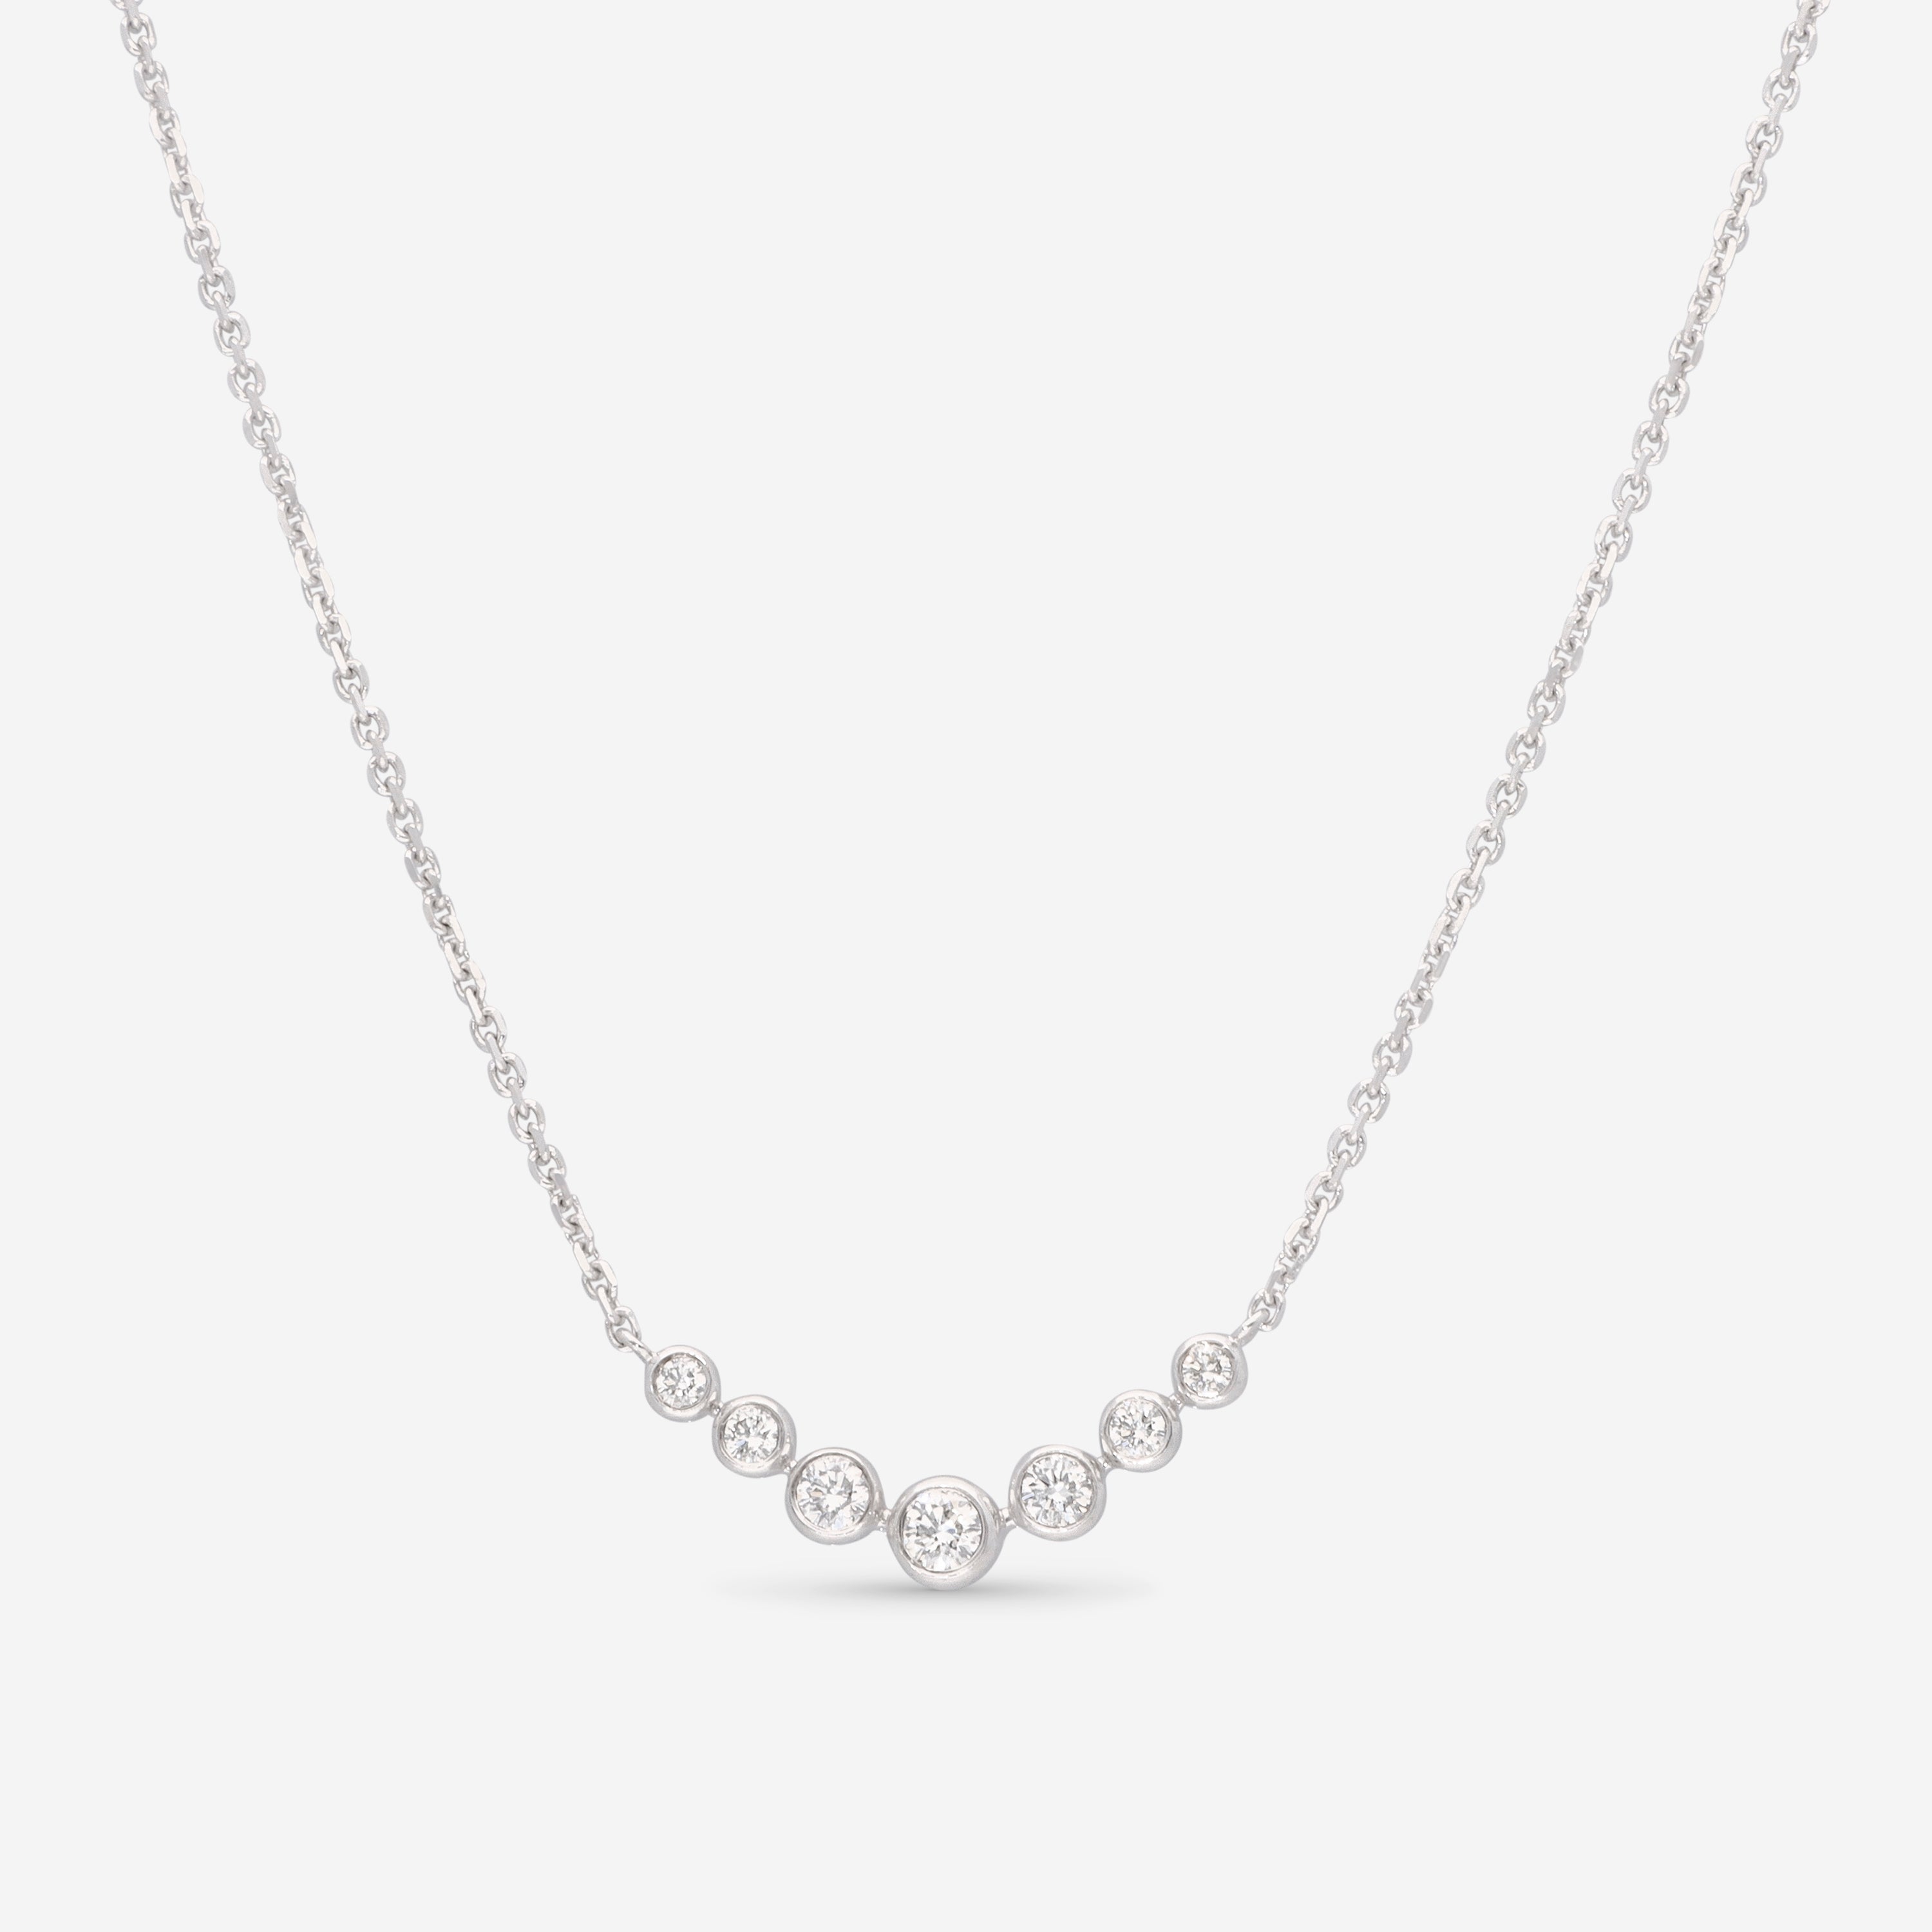 Ina Mar 18K White Gold, Diamond Pendant Necklace IMKGK23